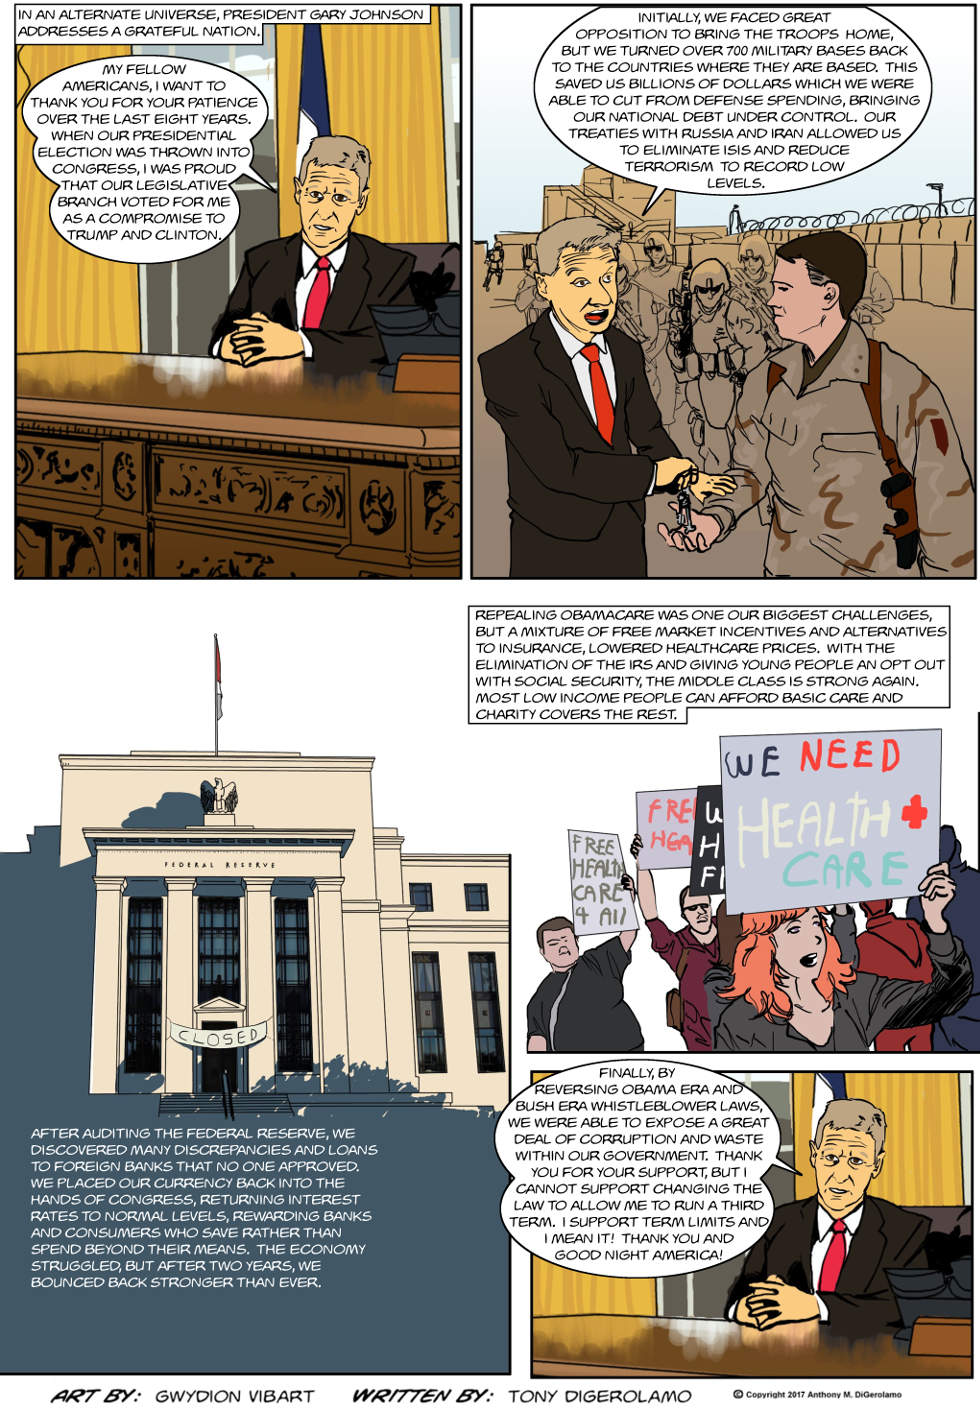 The Antiwar Comic: It’s All Part of my Libertarian Fantasy